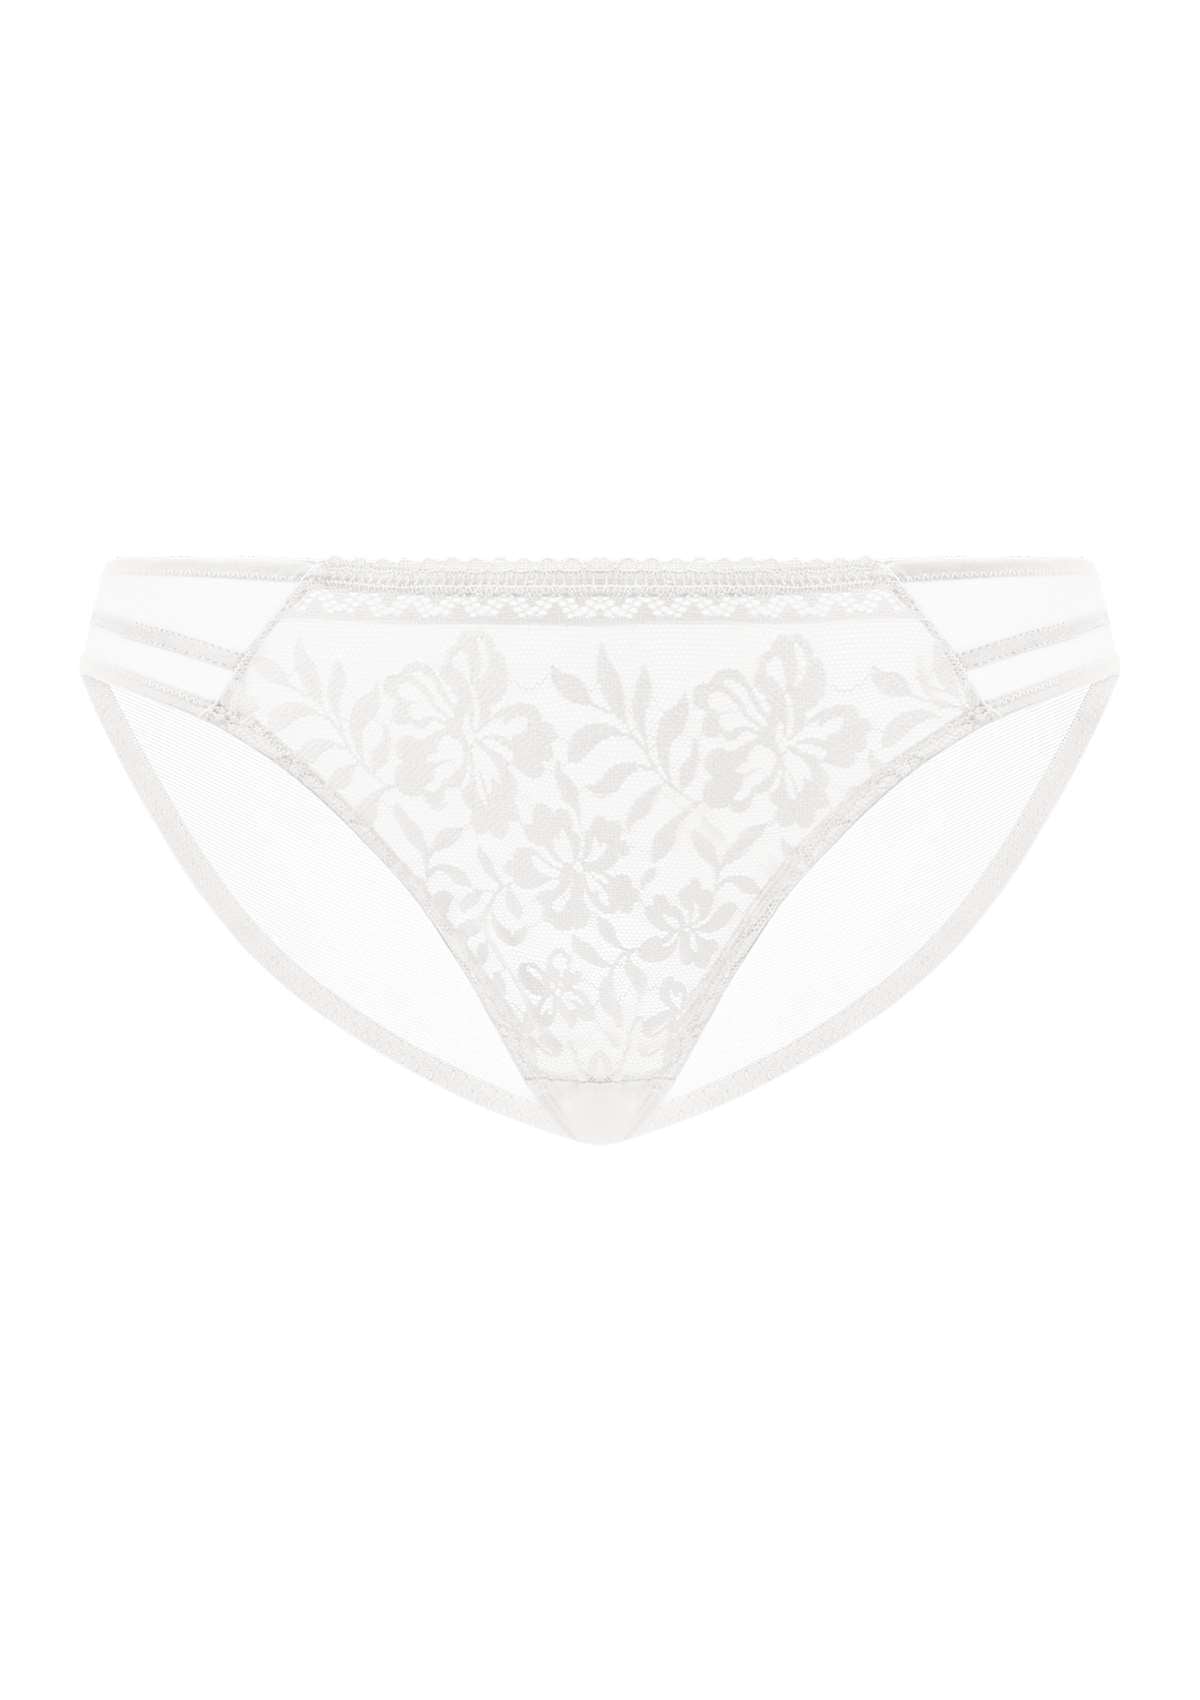 HSIA Gladioli Floral Lace Mesh Airy Elegant Beautiful Bikini Underwear - L / White